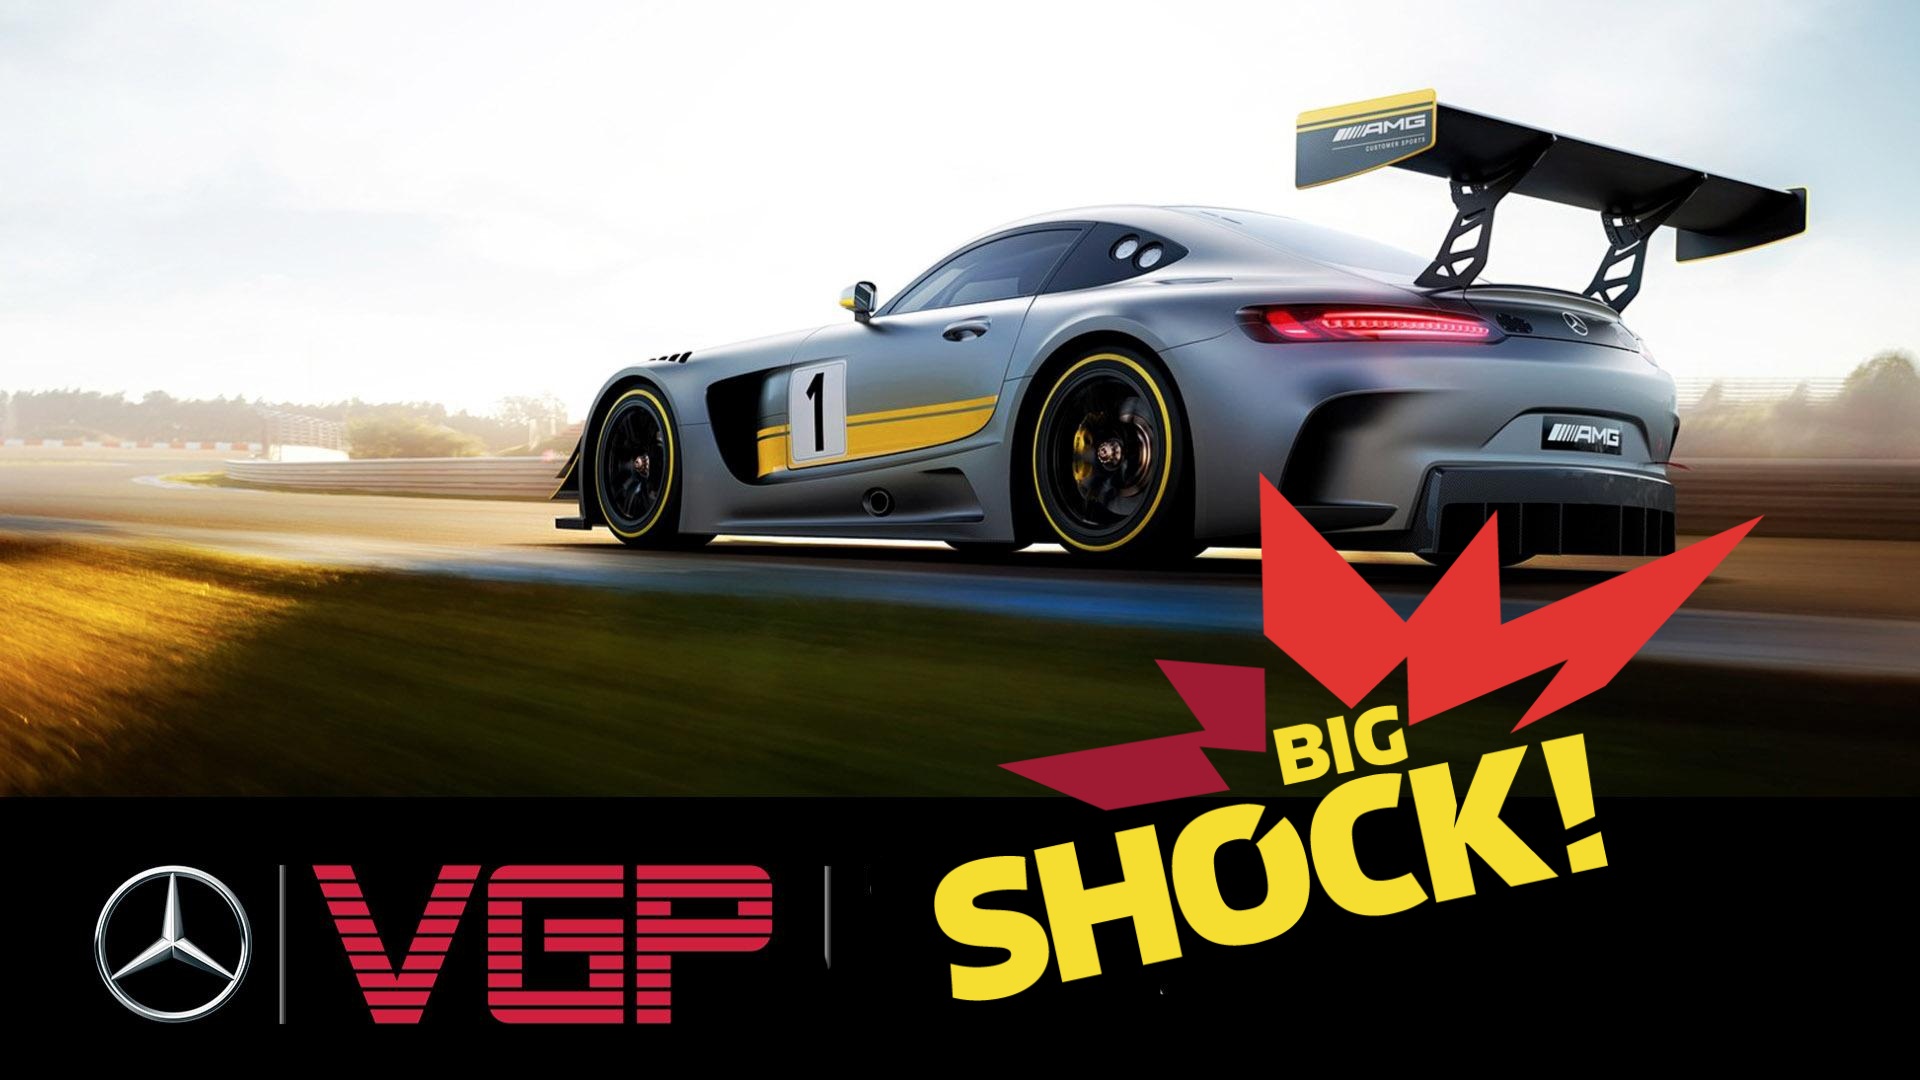 Rozhovor: Ohlédnutí za sezónou Virtual GP 2020 s týmem BigShock Energy